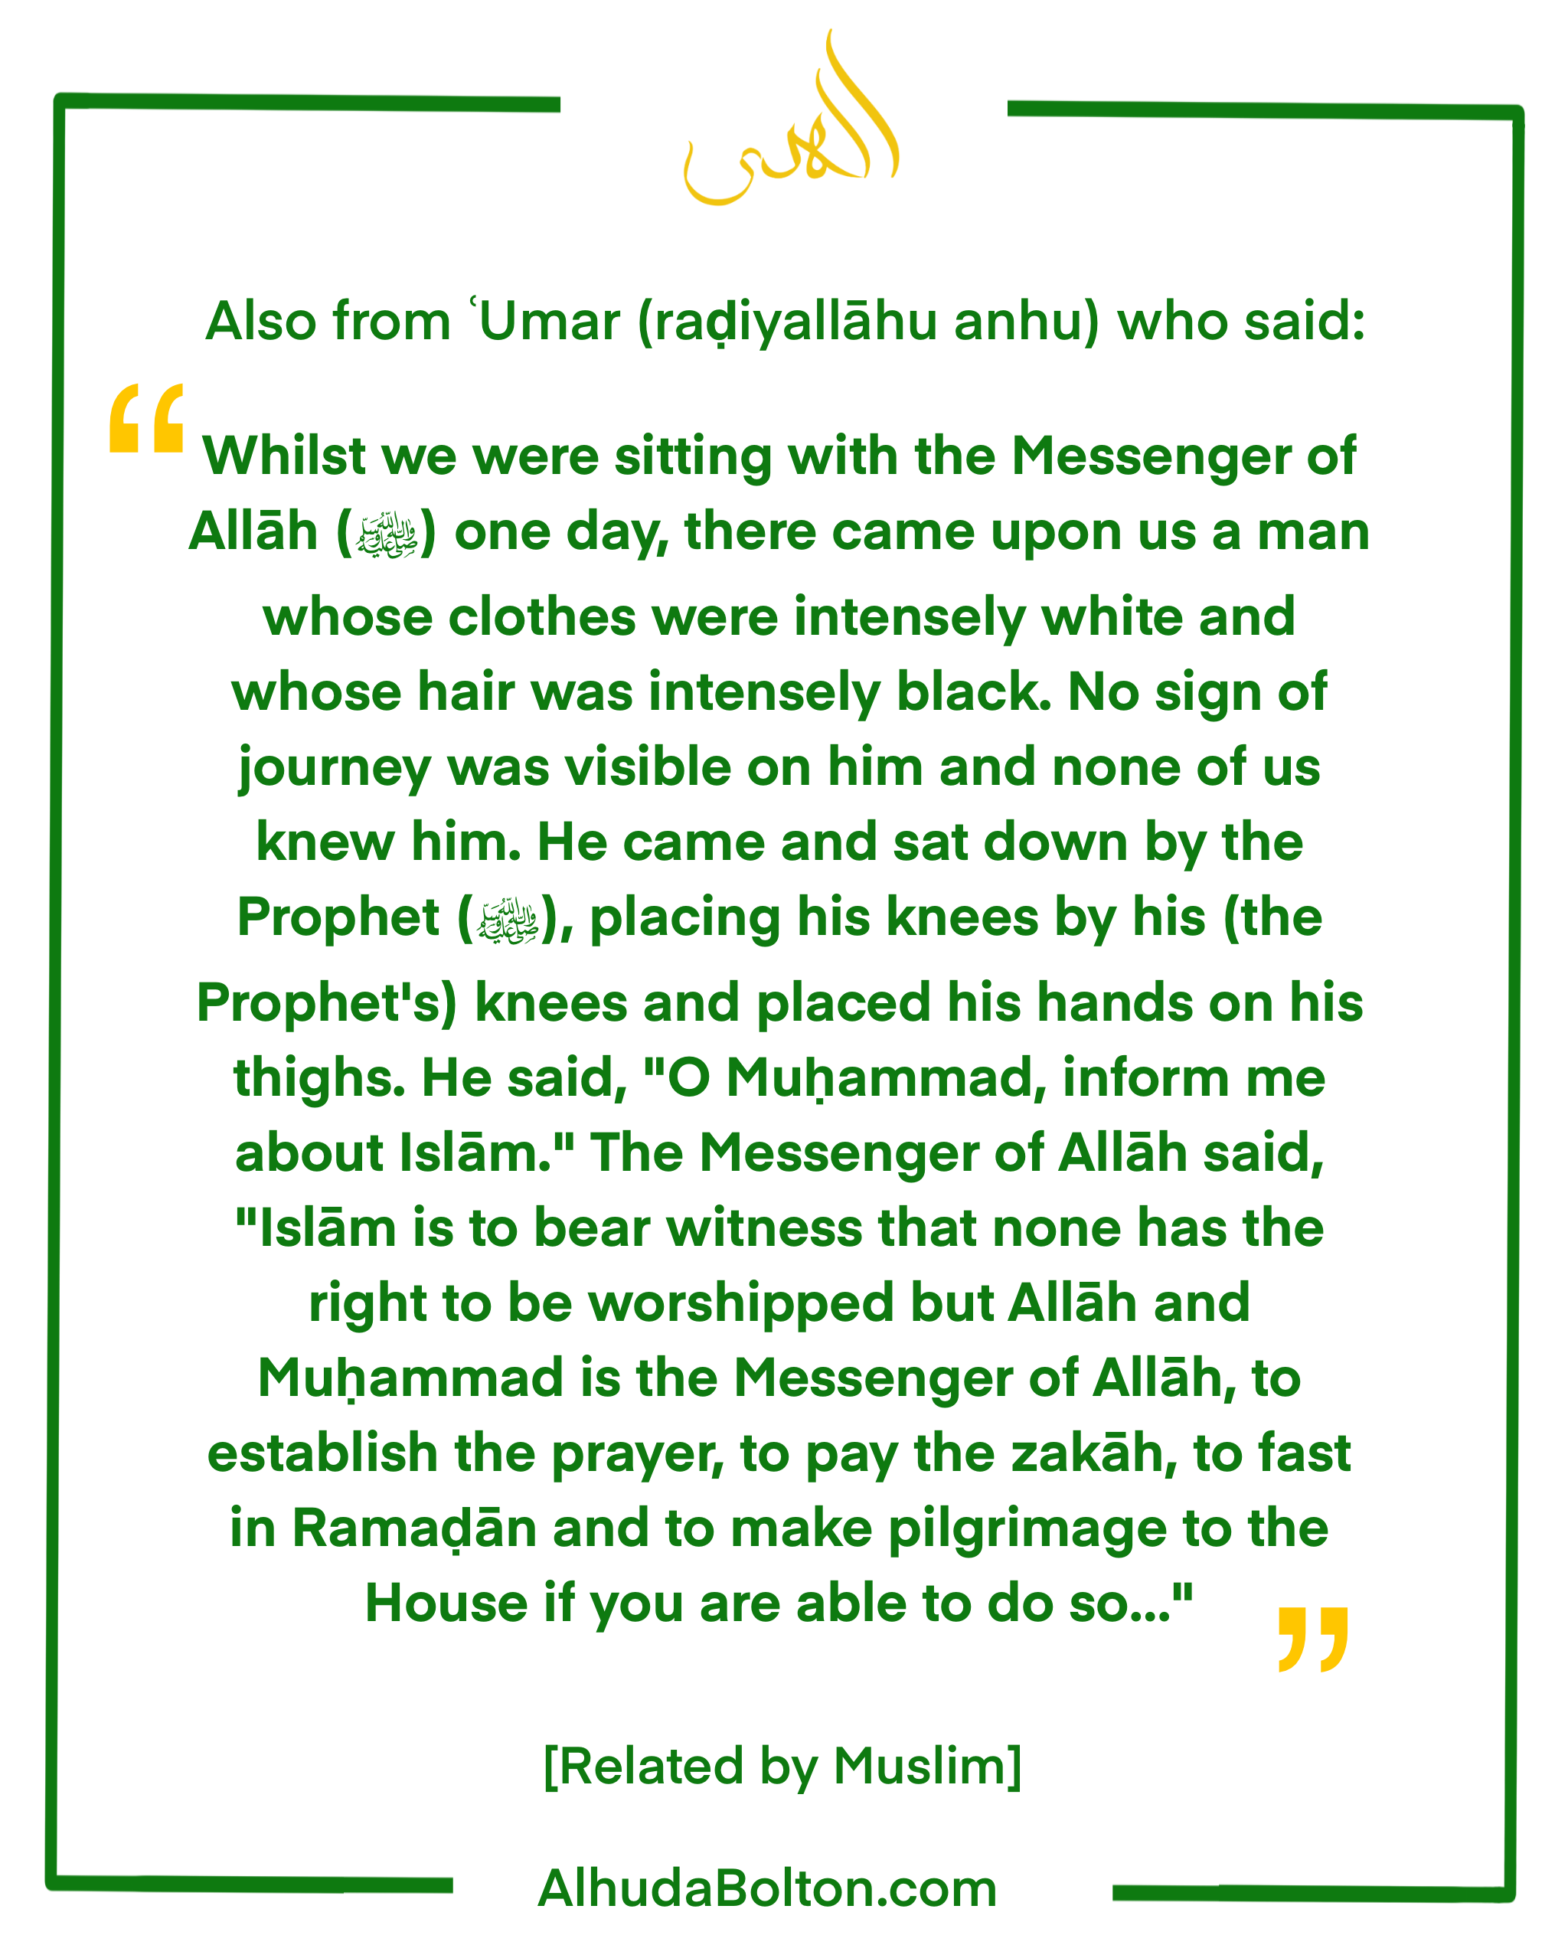 Weekly Hadith: “Inform me about Islam…”